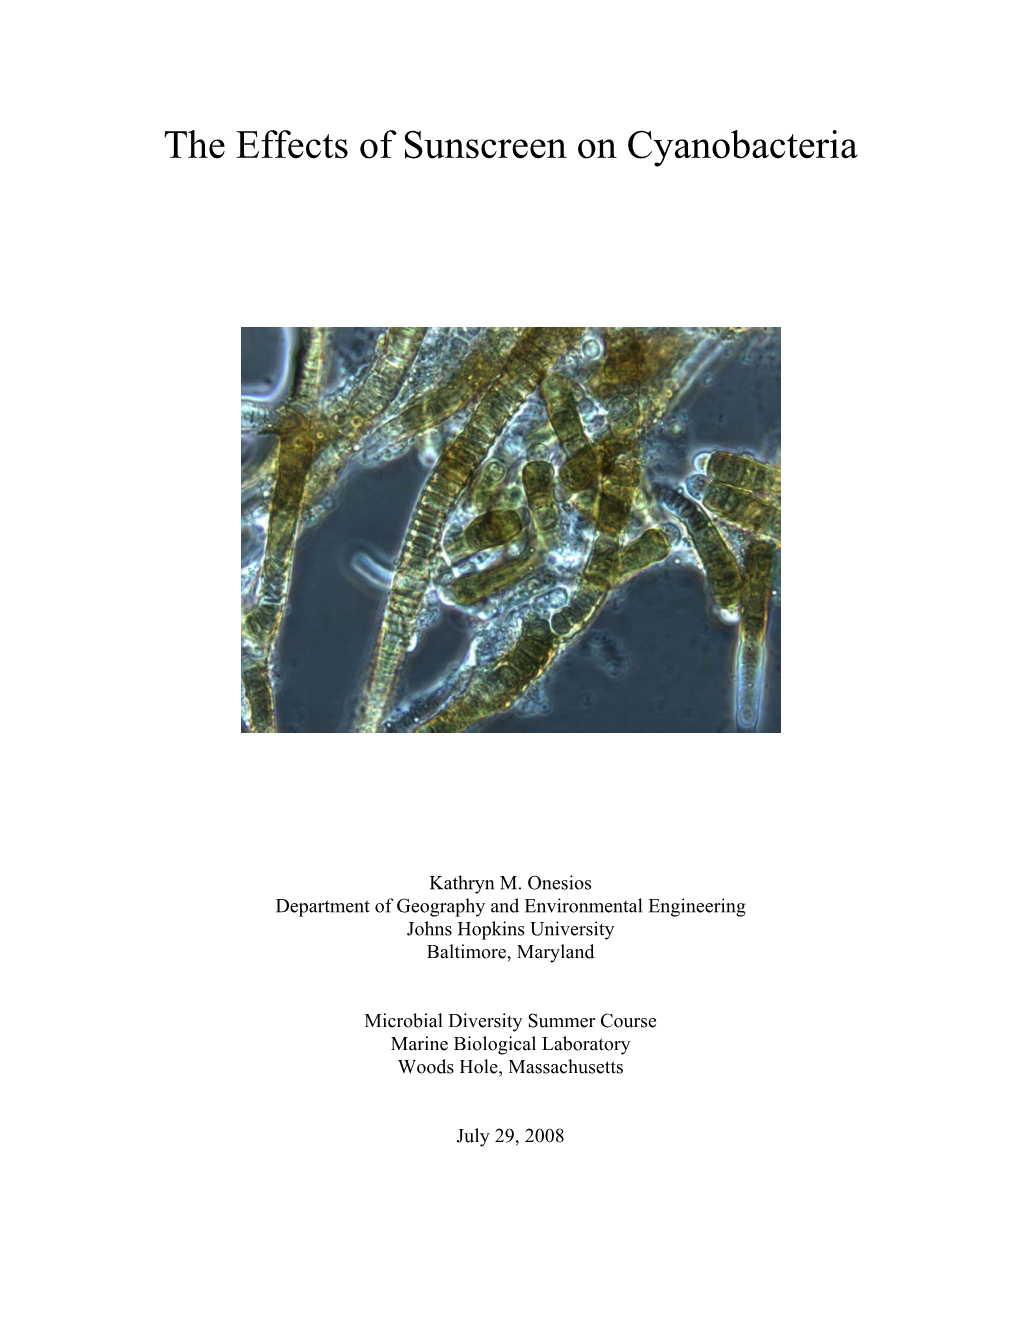 Onesios, K. the Effects of Sunscreen on Cyanobacteria